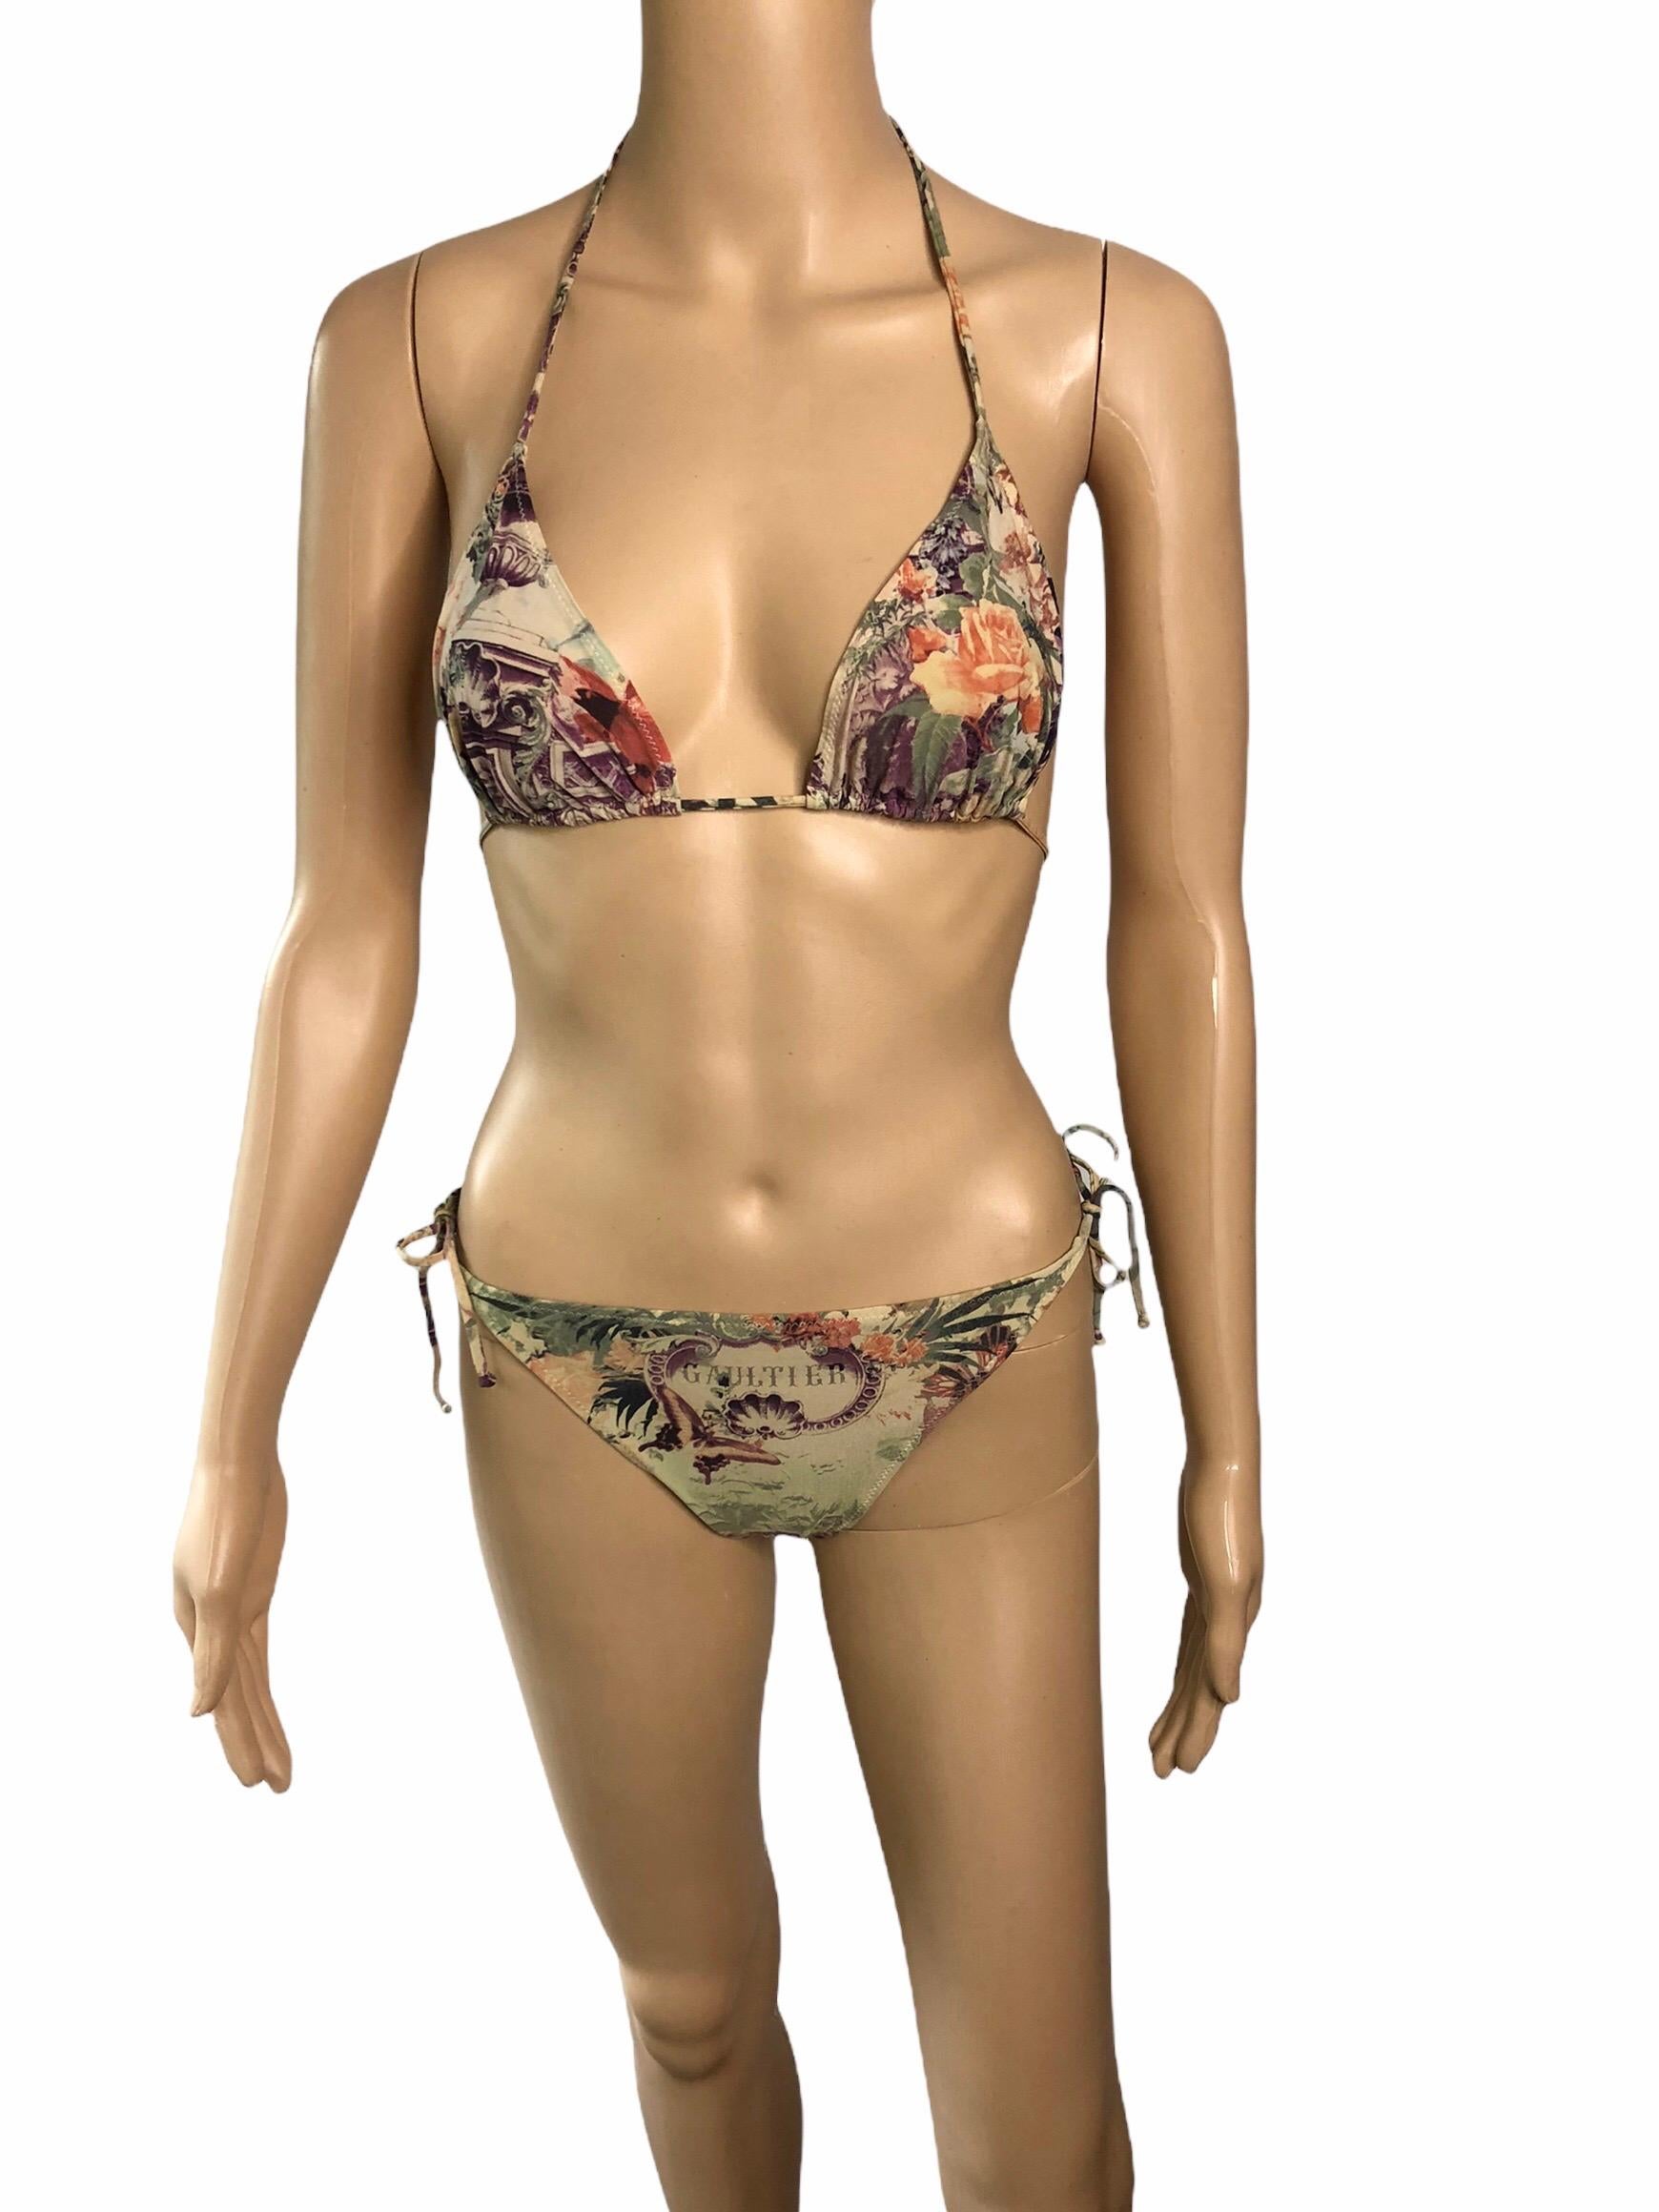 Jean Paul Gaultier Soleil  S/S 1999 Flamingo Tropical Print Bikini Swimwear Swimsuit 2 Piece Set IT 44


